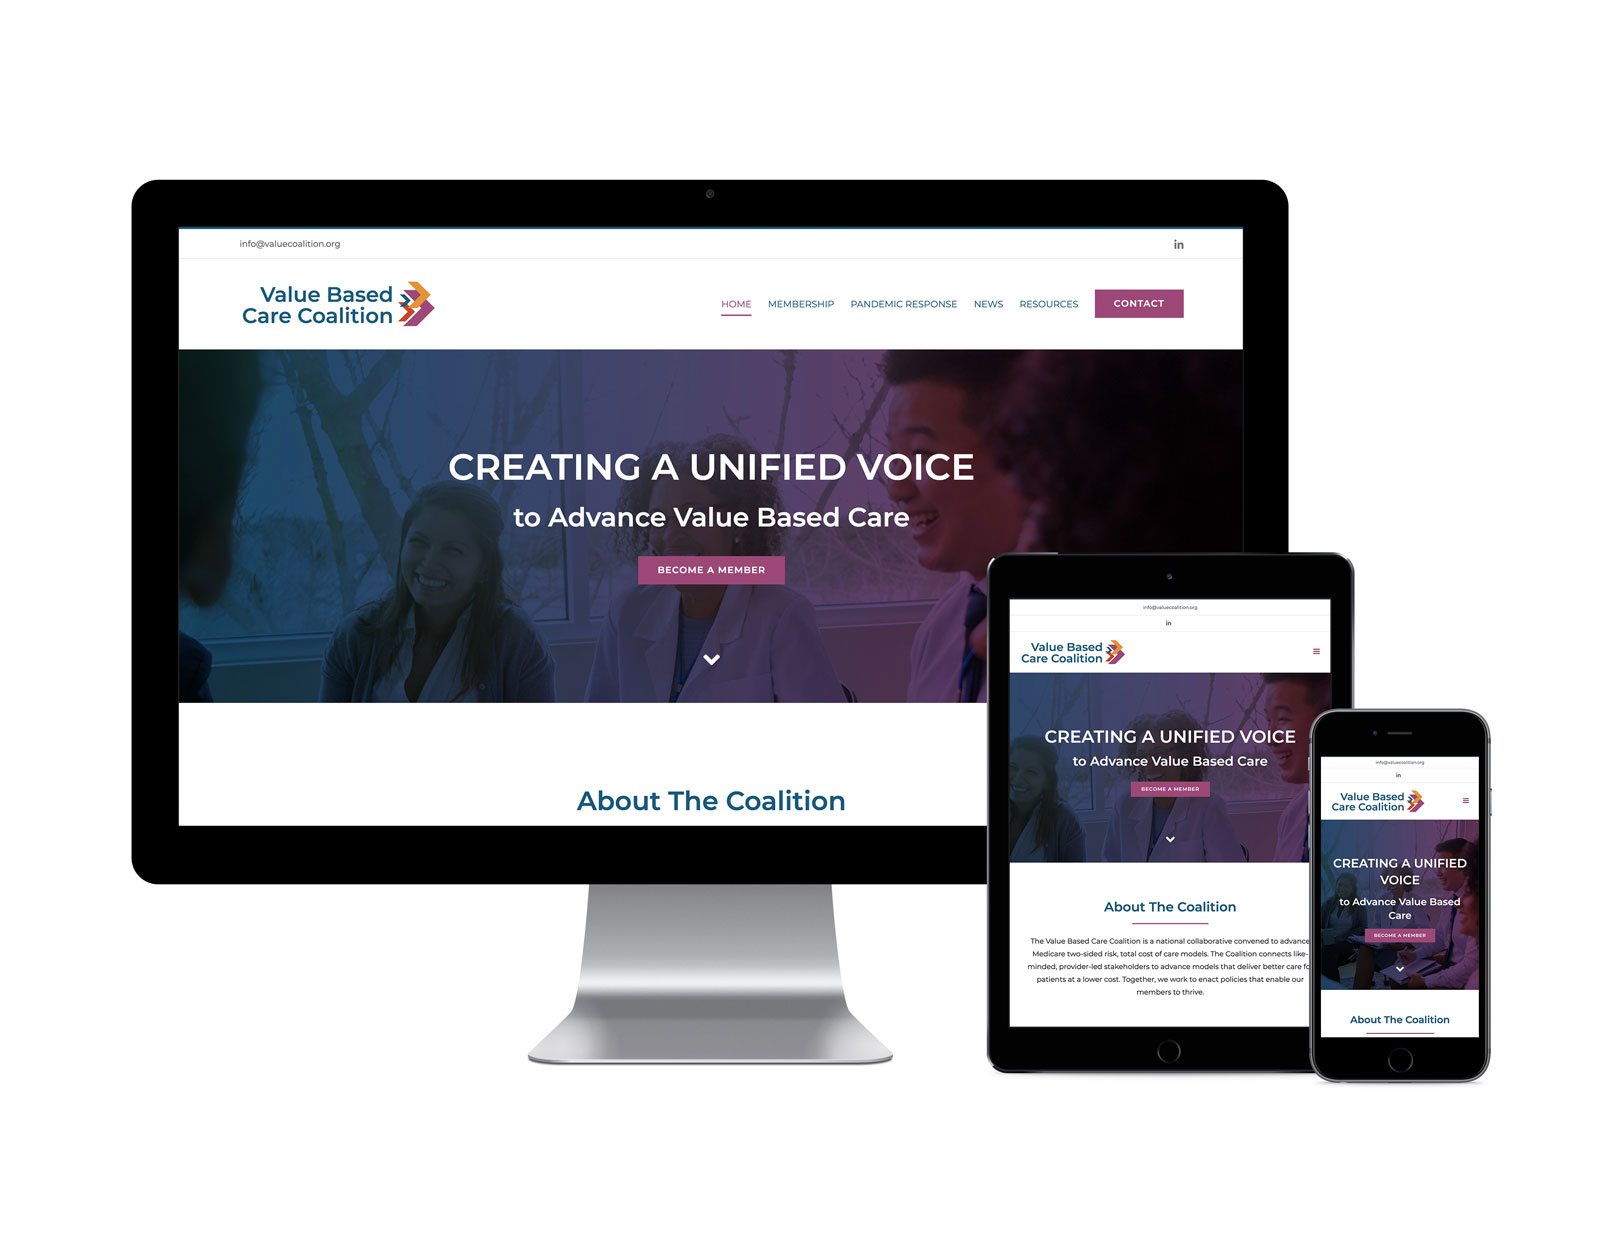 Value Based Care Coalition website